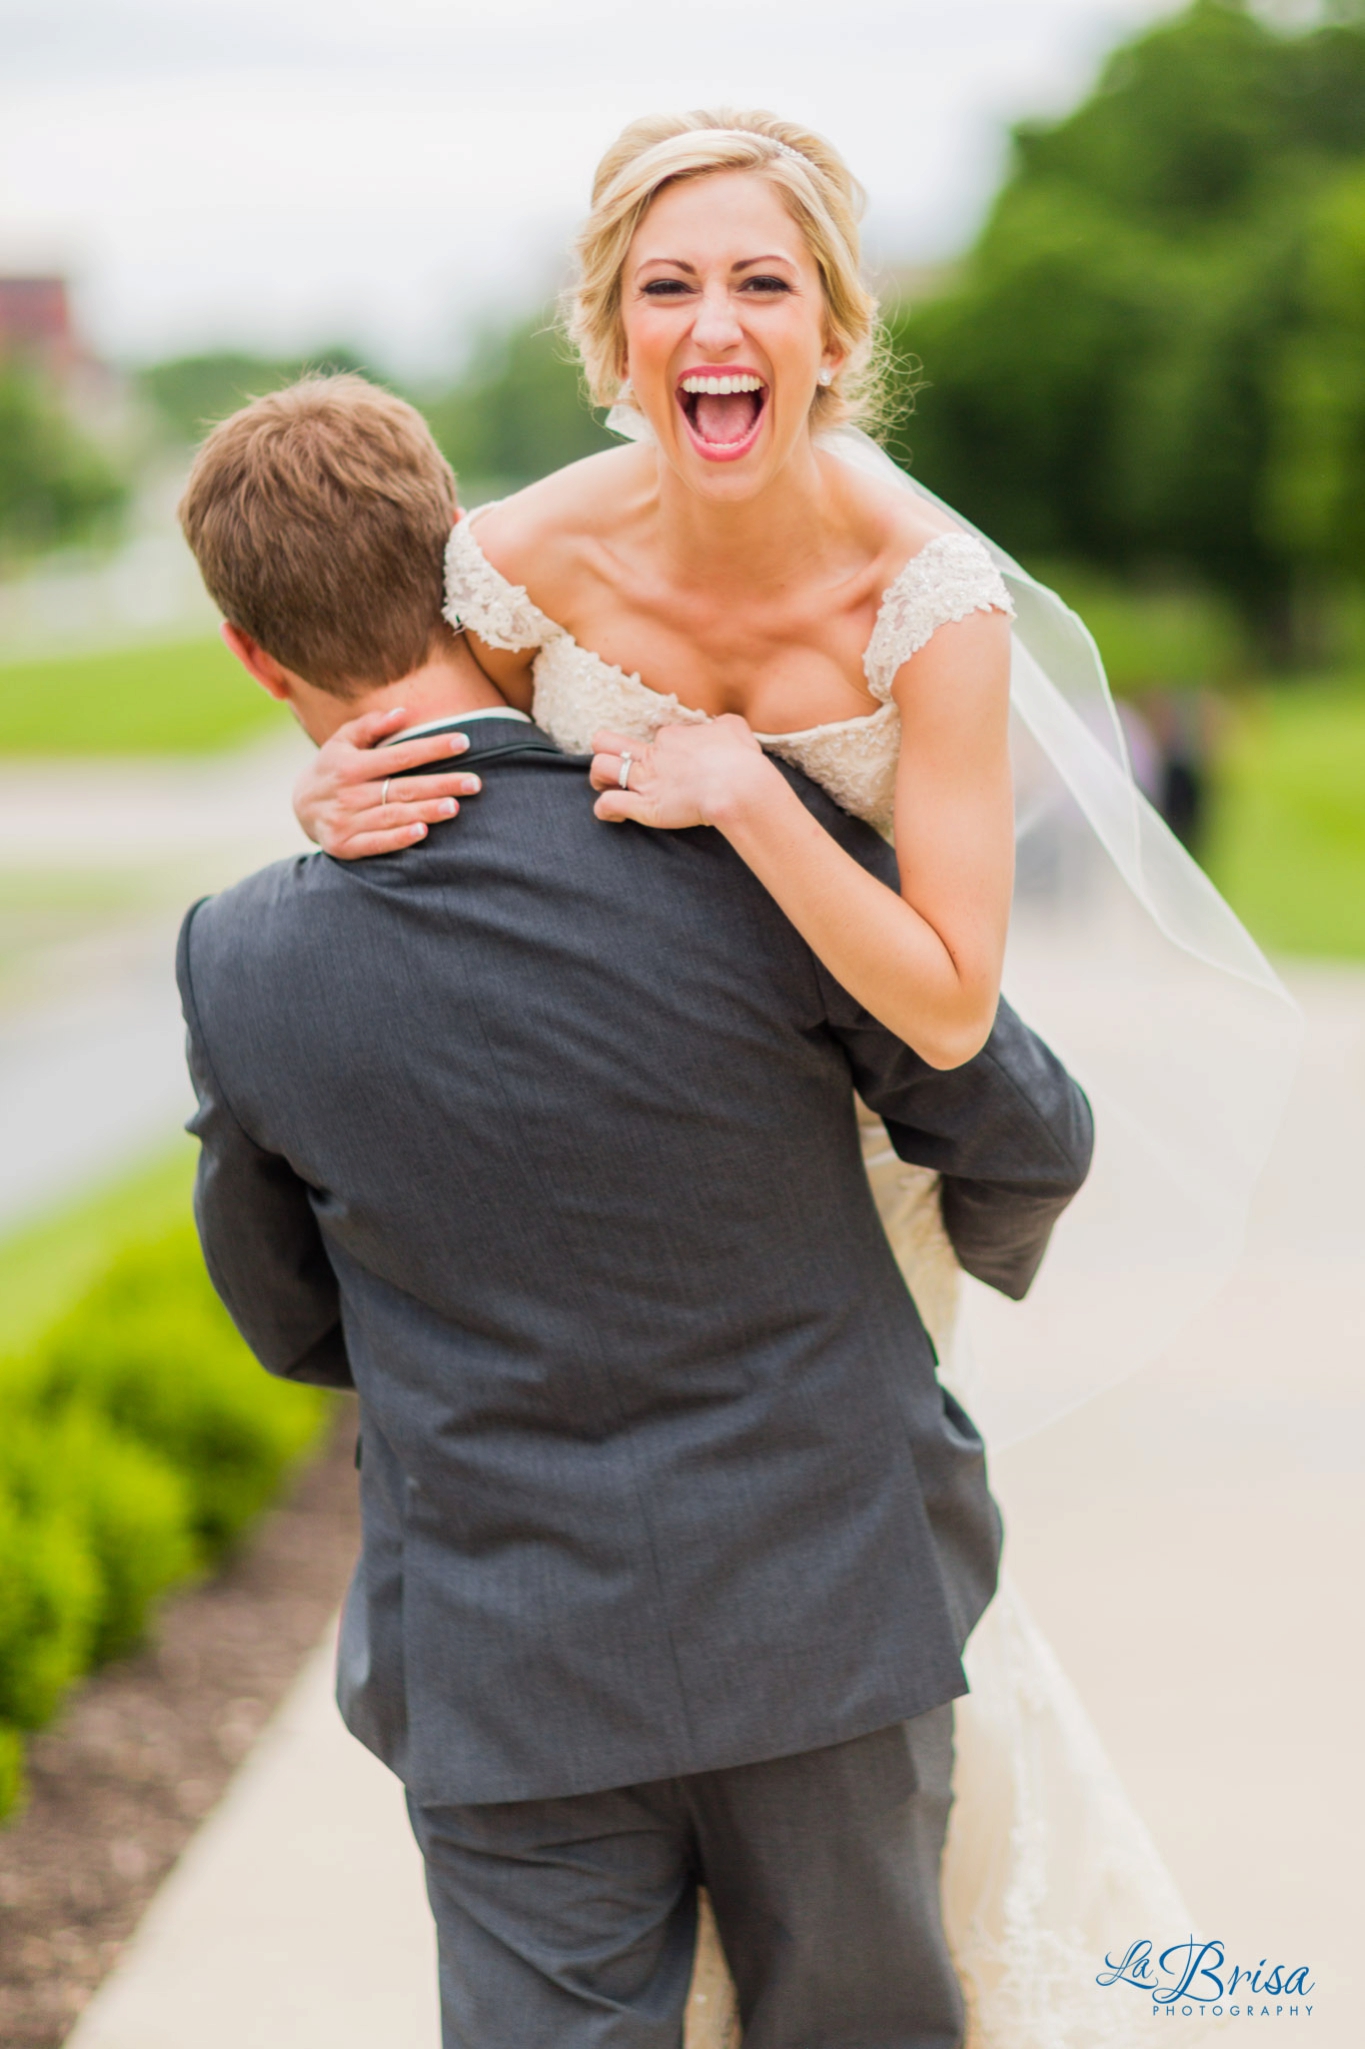 Emily & Nate | Wedding Photography Preview | Kansas City, MO | Chris Hsieh